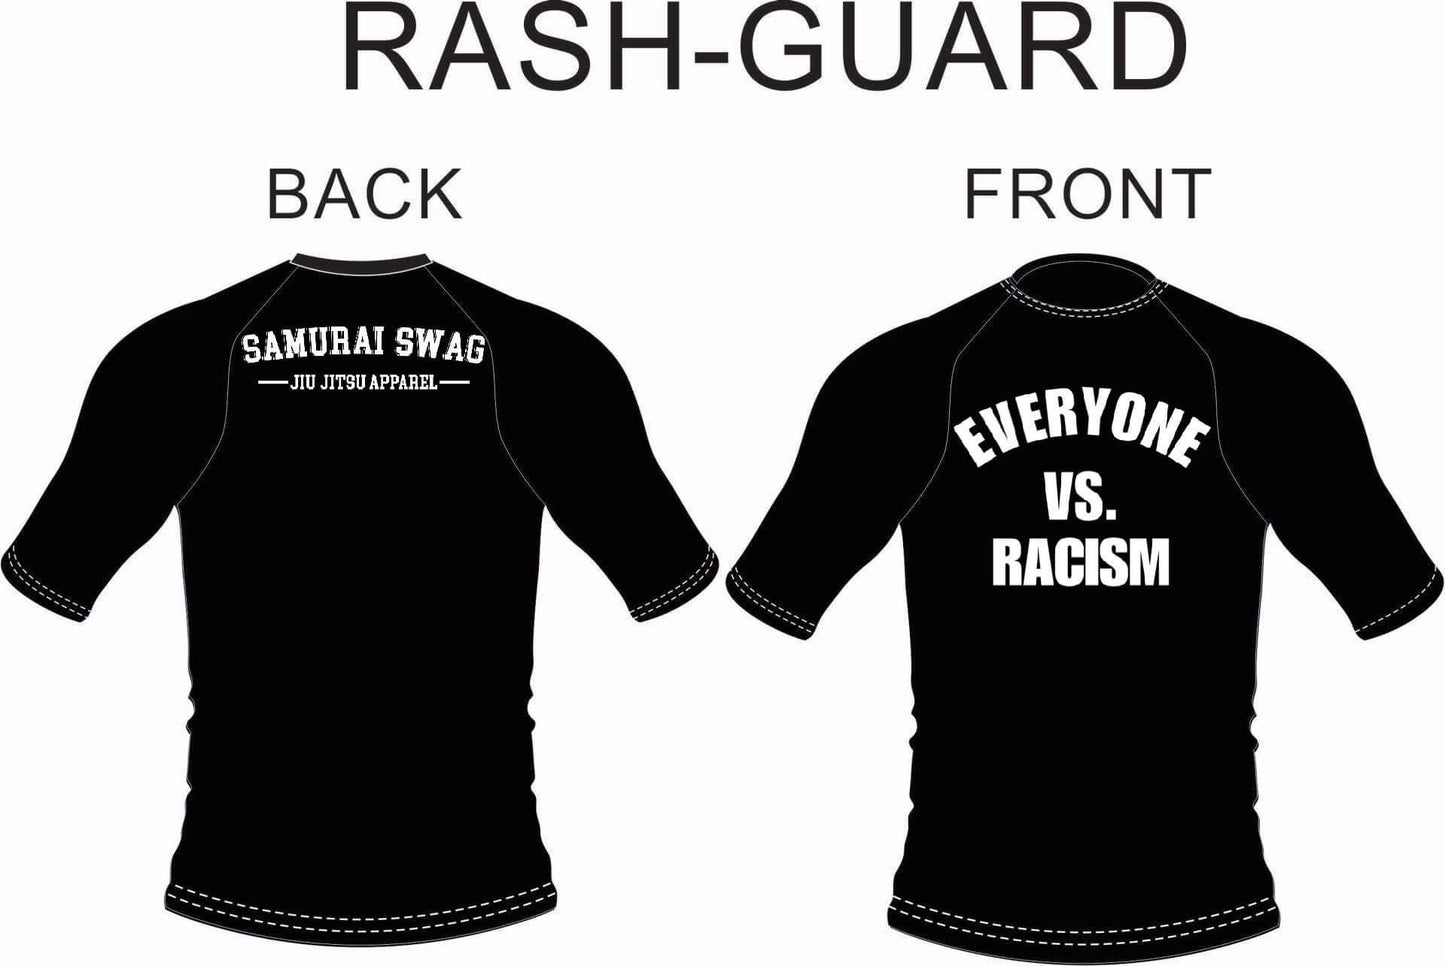 Everyone VS. Racism Rashguard